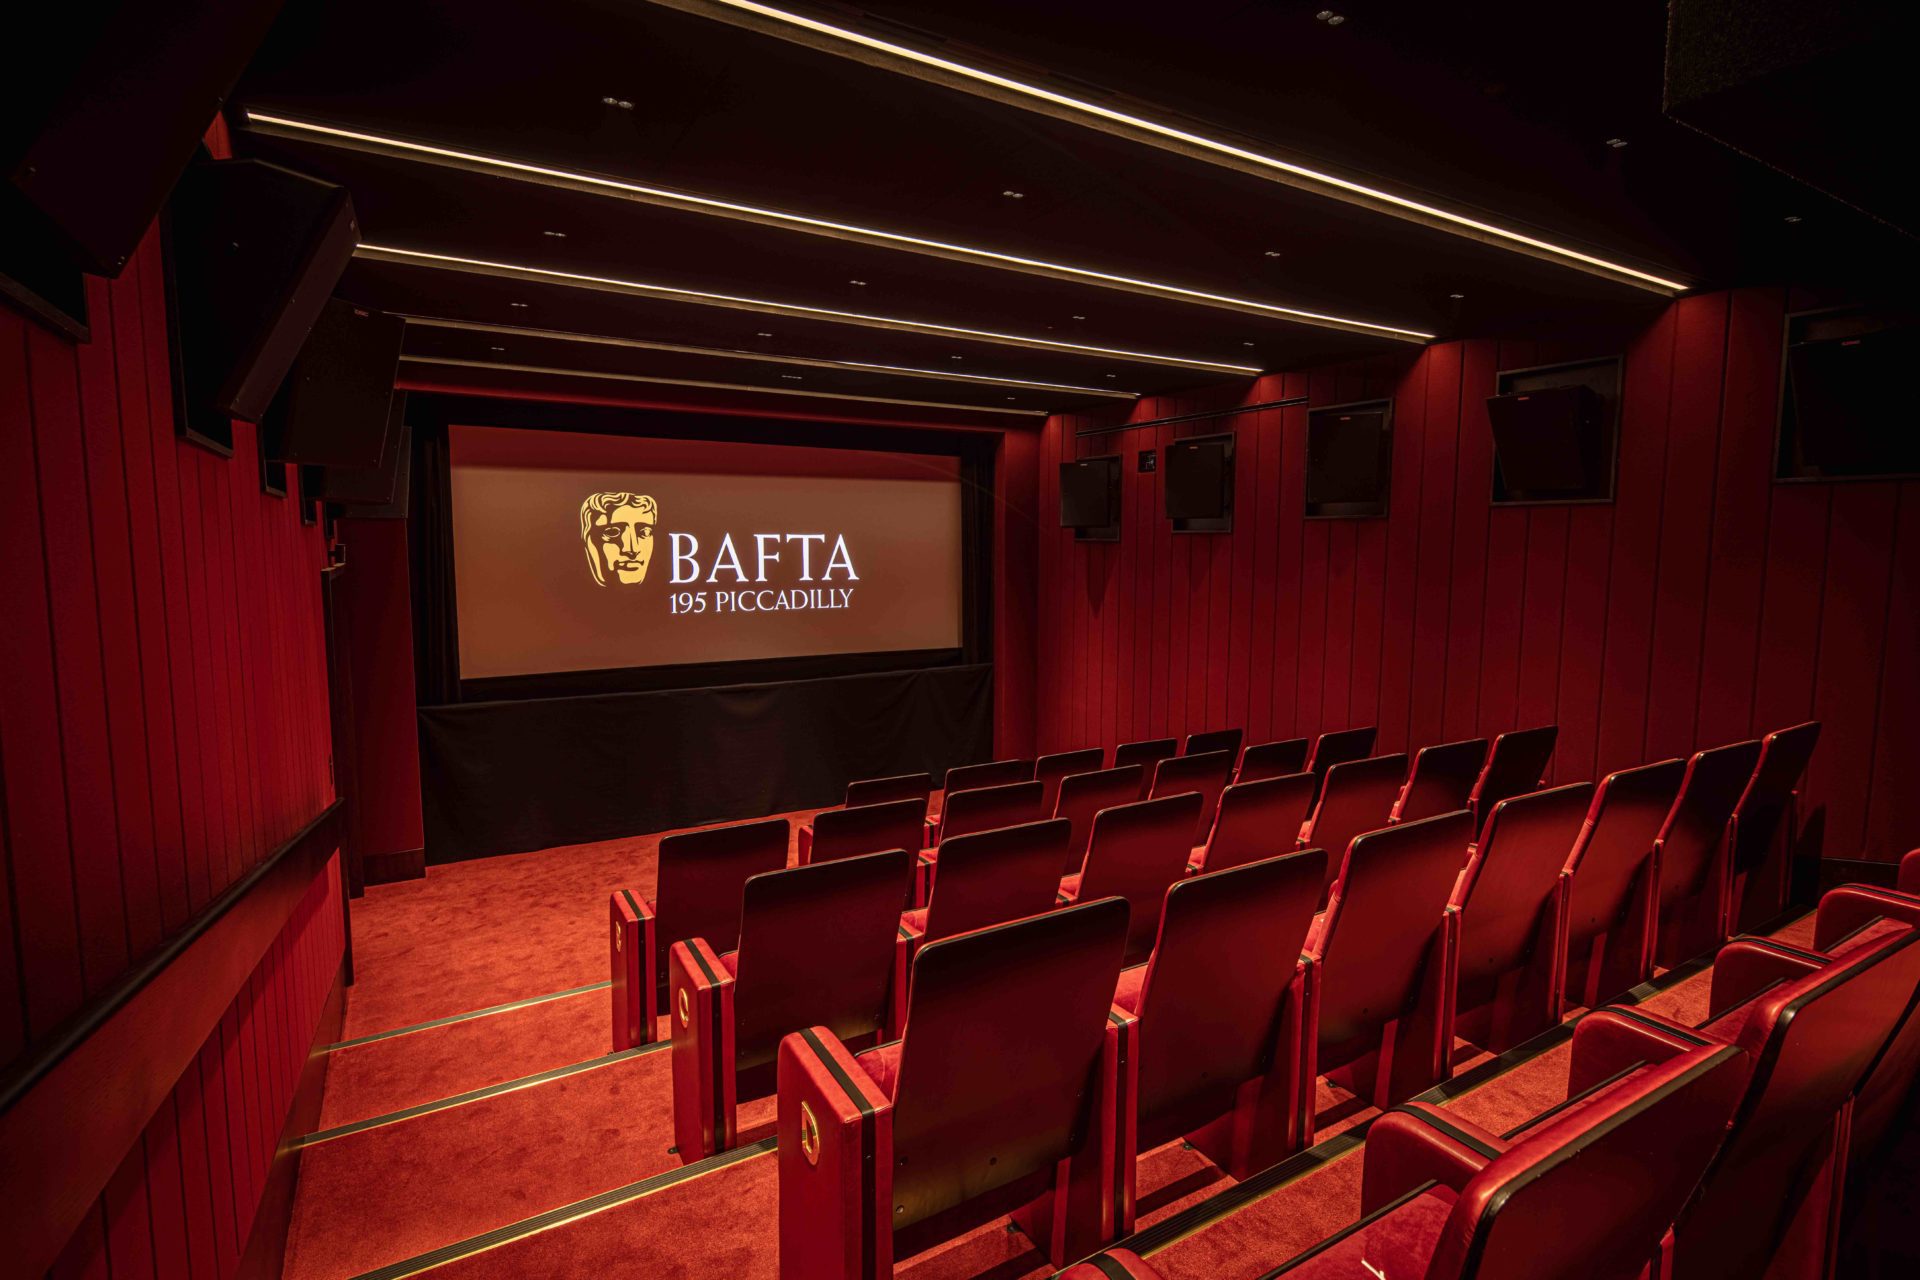 BAFTA cinema red seats